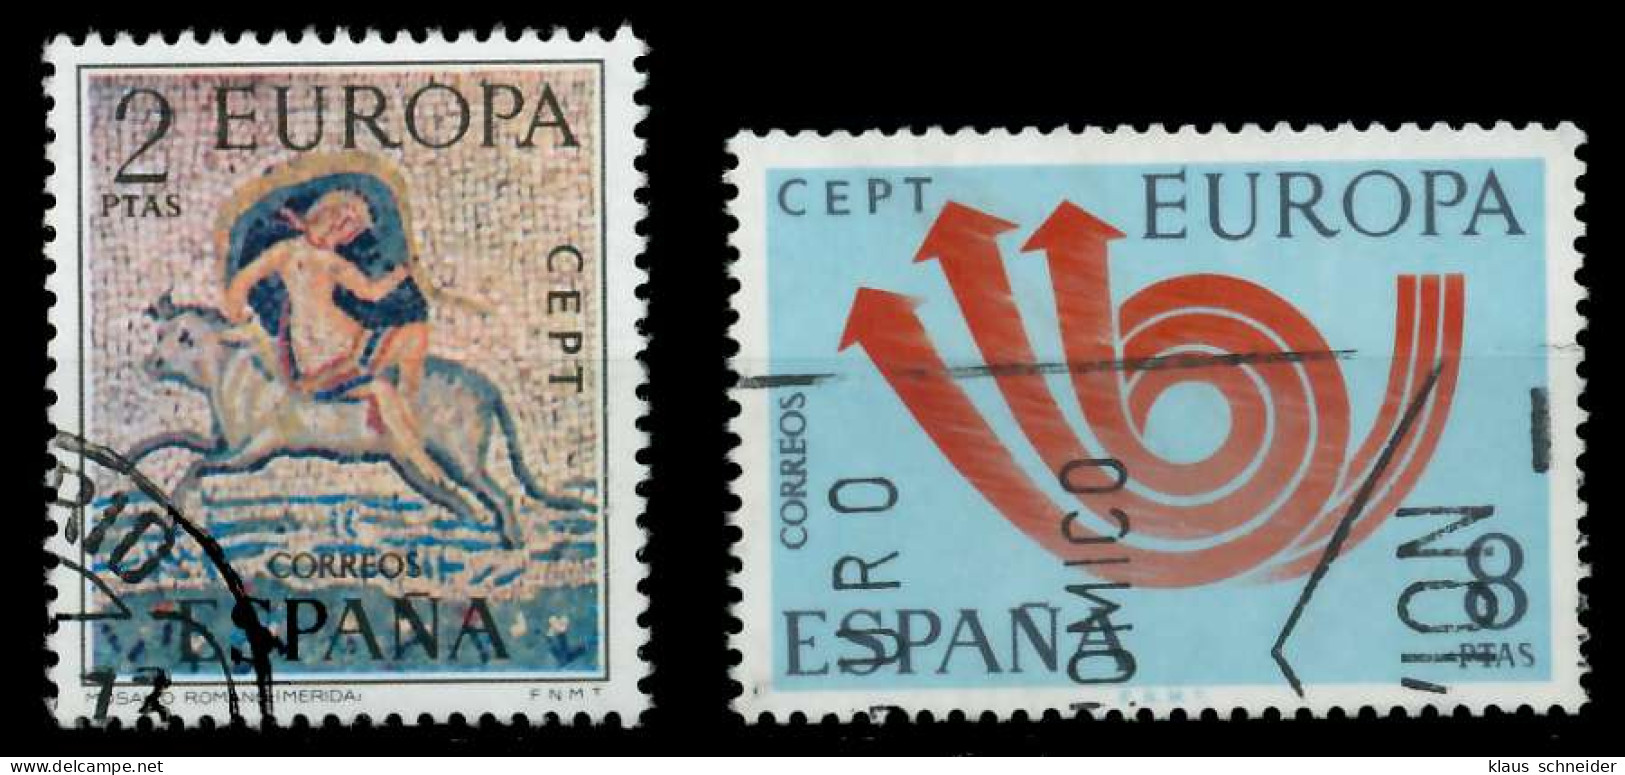 SPANIEN 1973 Nr 2020-2021 Gestempelt X040742 - Oblitérés